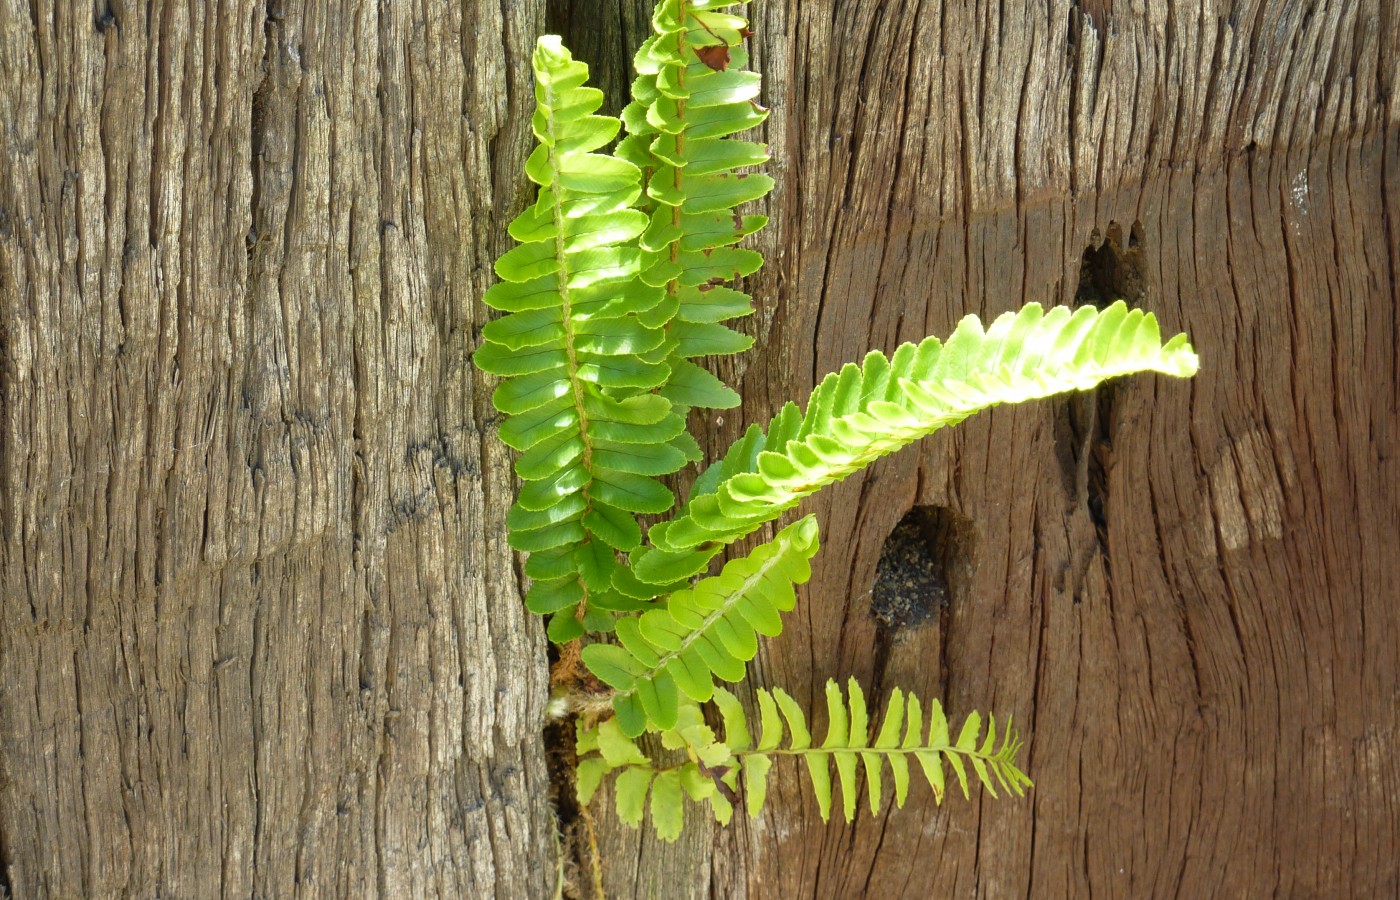 Native fern